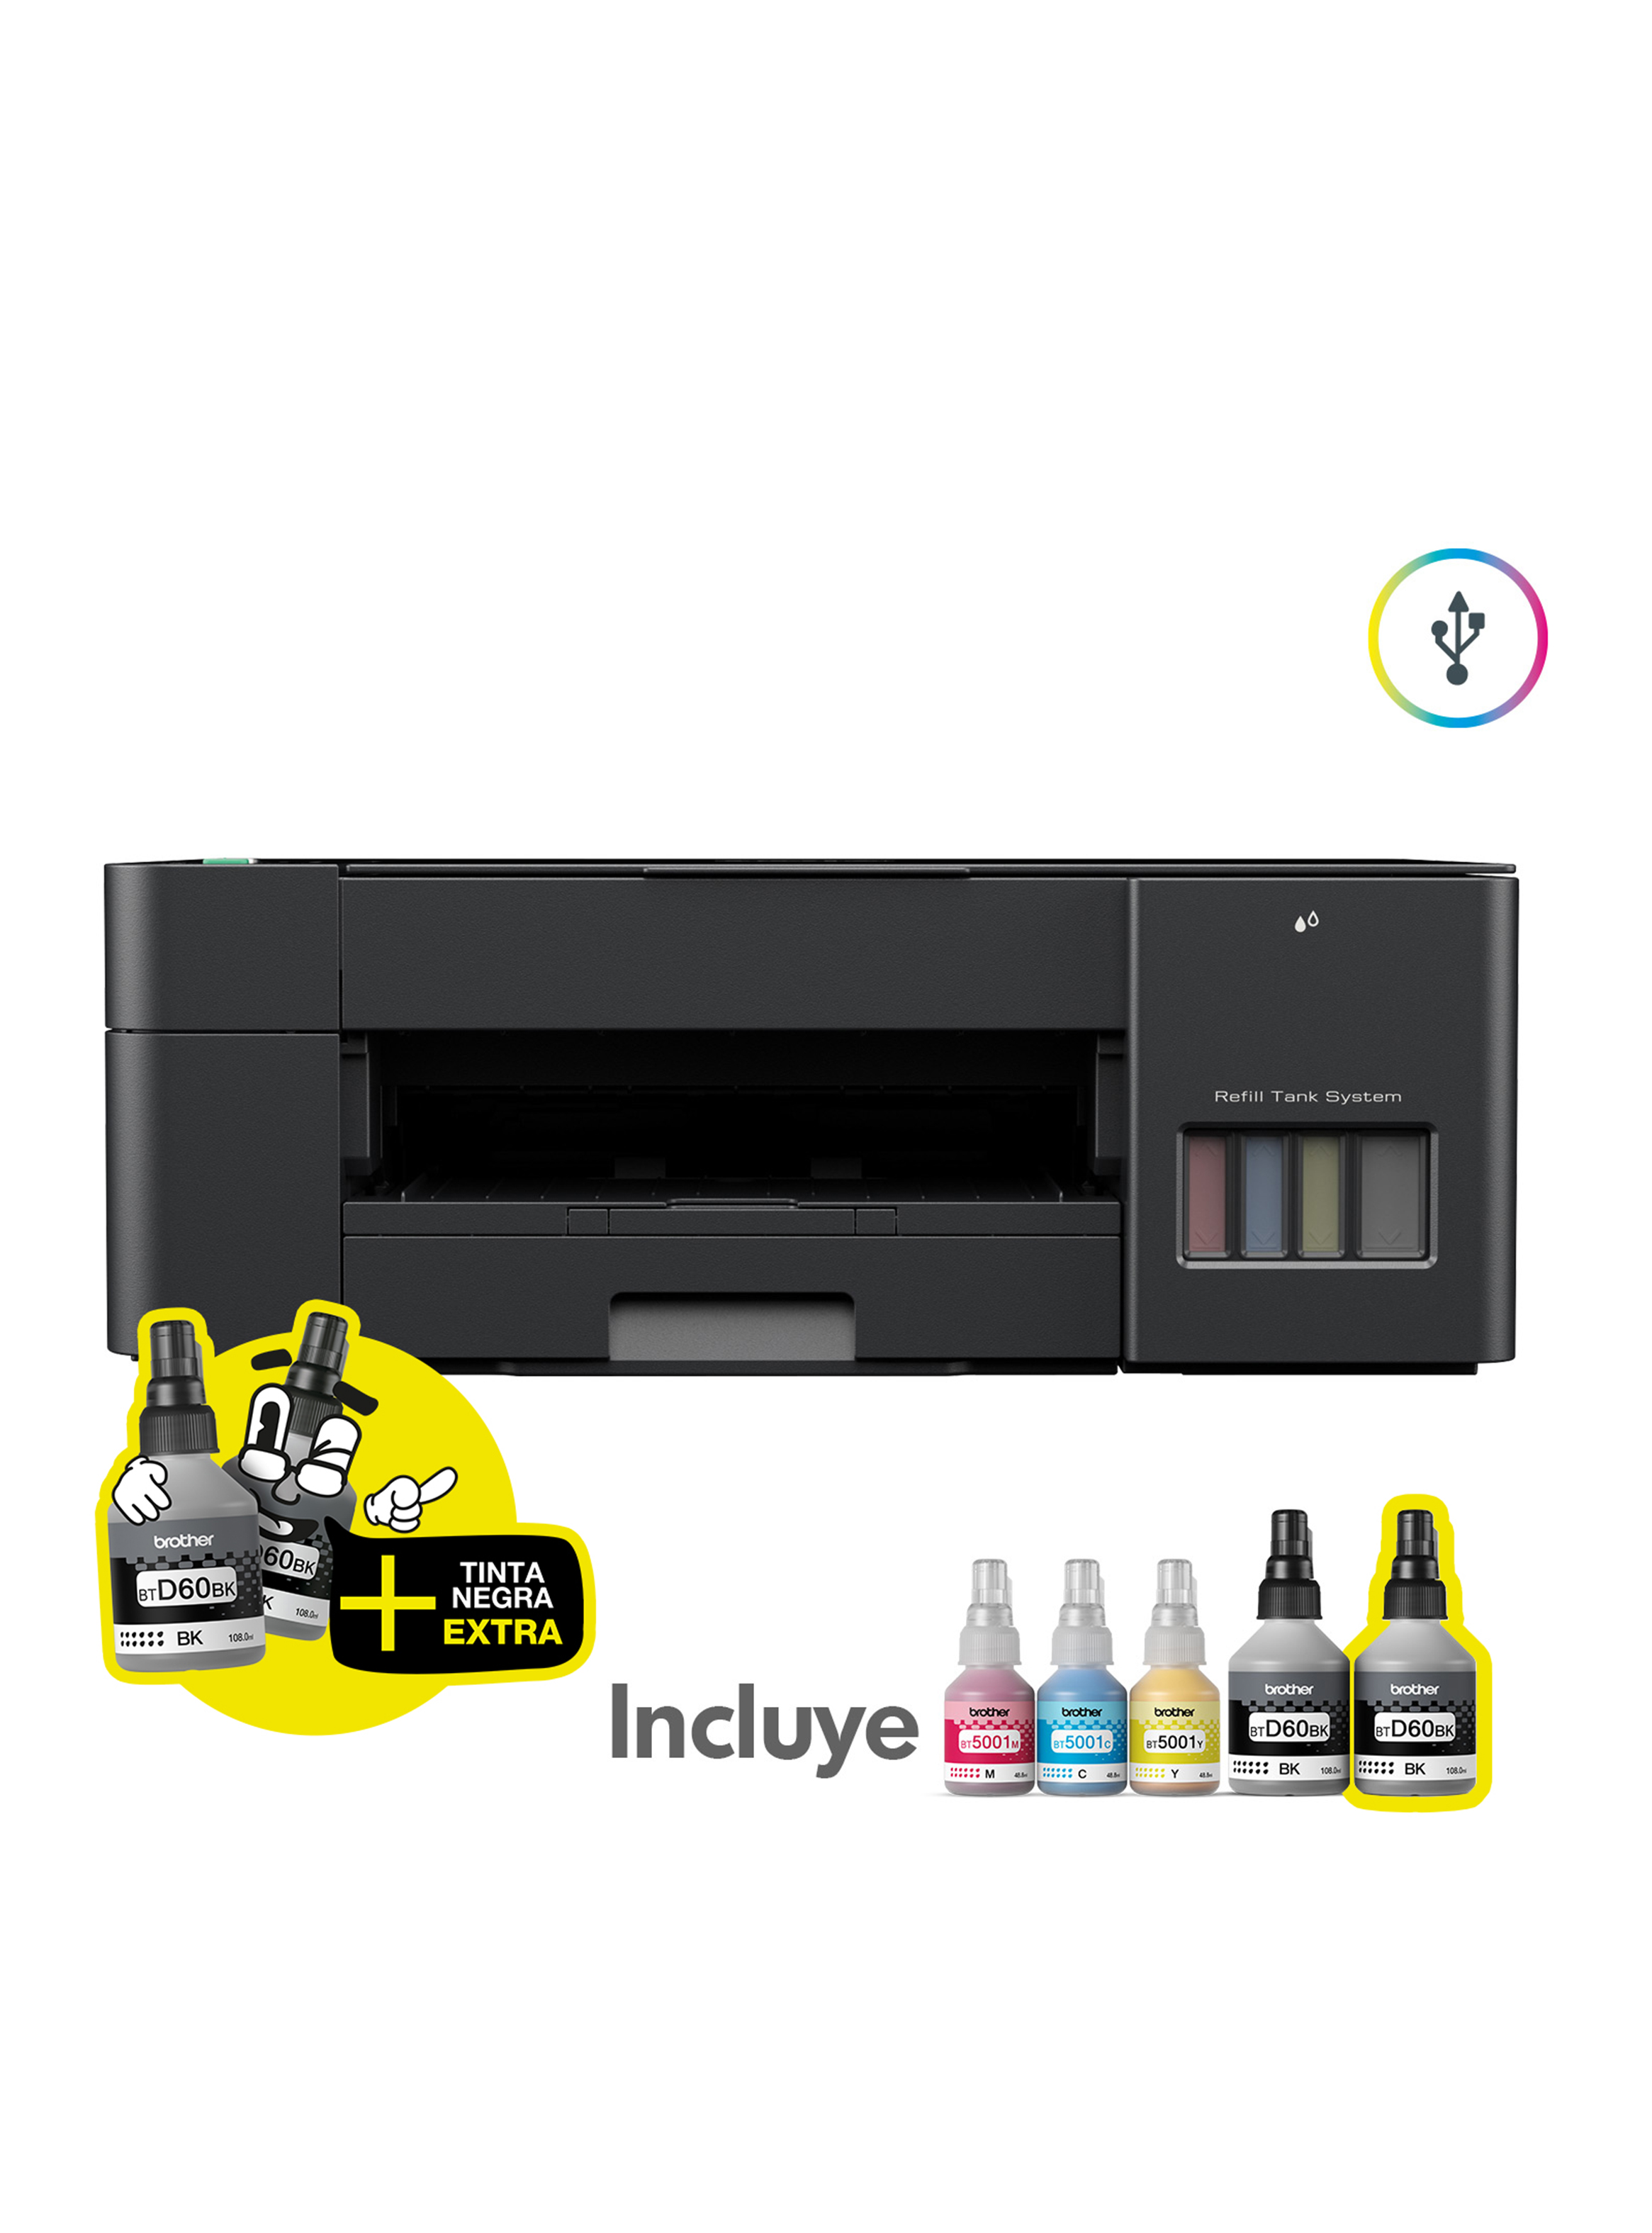 Impresora Multifuncional DCP-T220 + Tinta Negra EXTRA